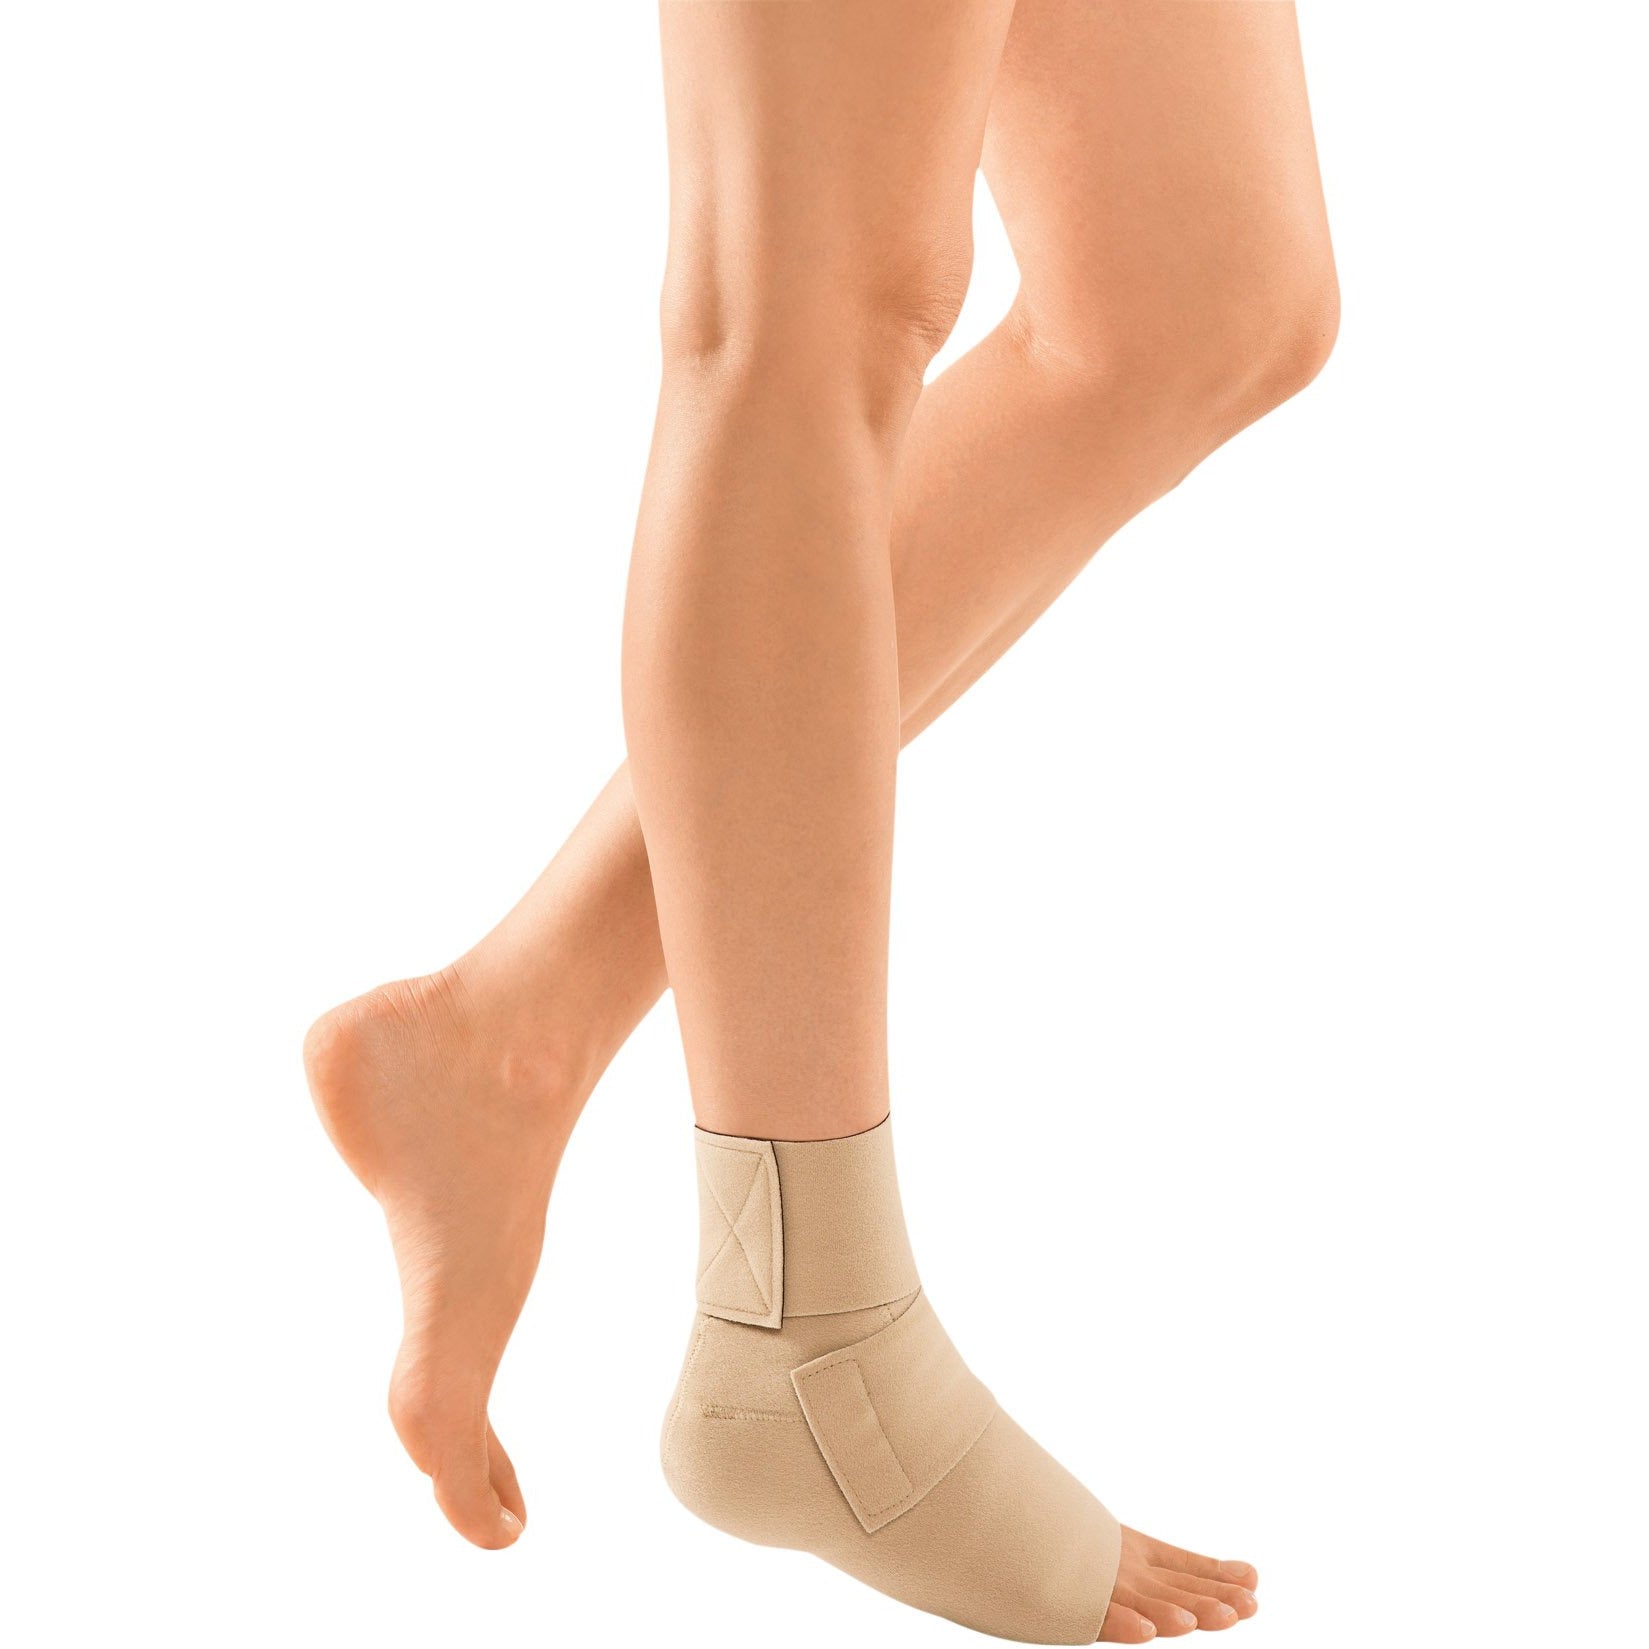 circaid juxatalite HD Lower Leg Compression Wrap